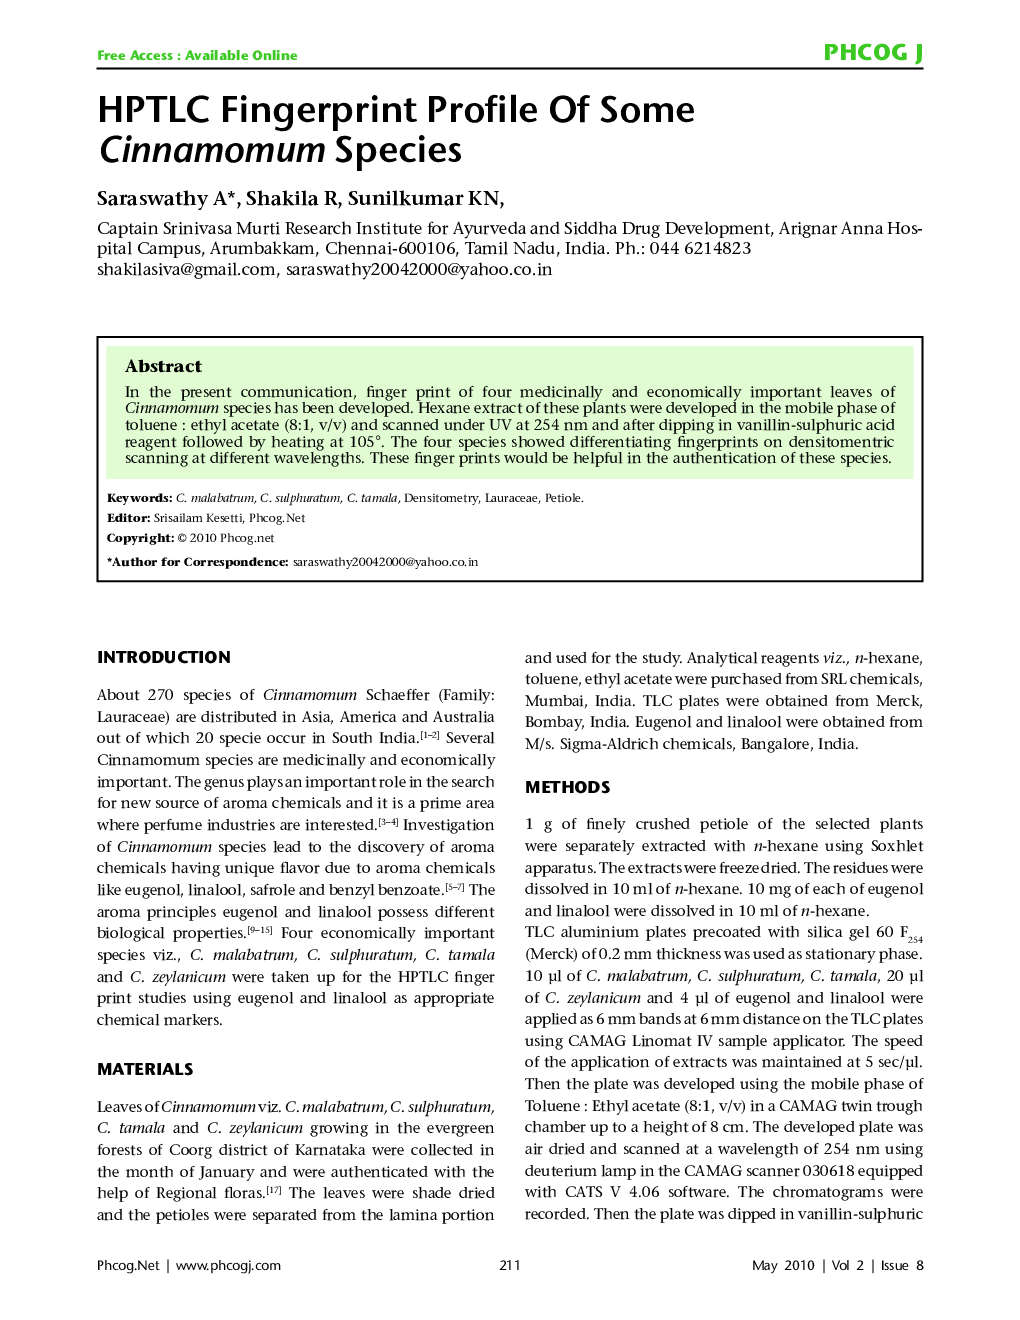 HPTLC Fingerprint Profile Of Some Cinnamomum Species